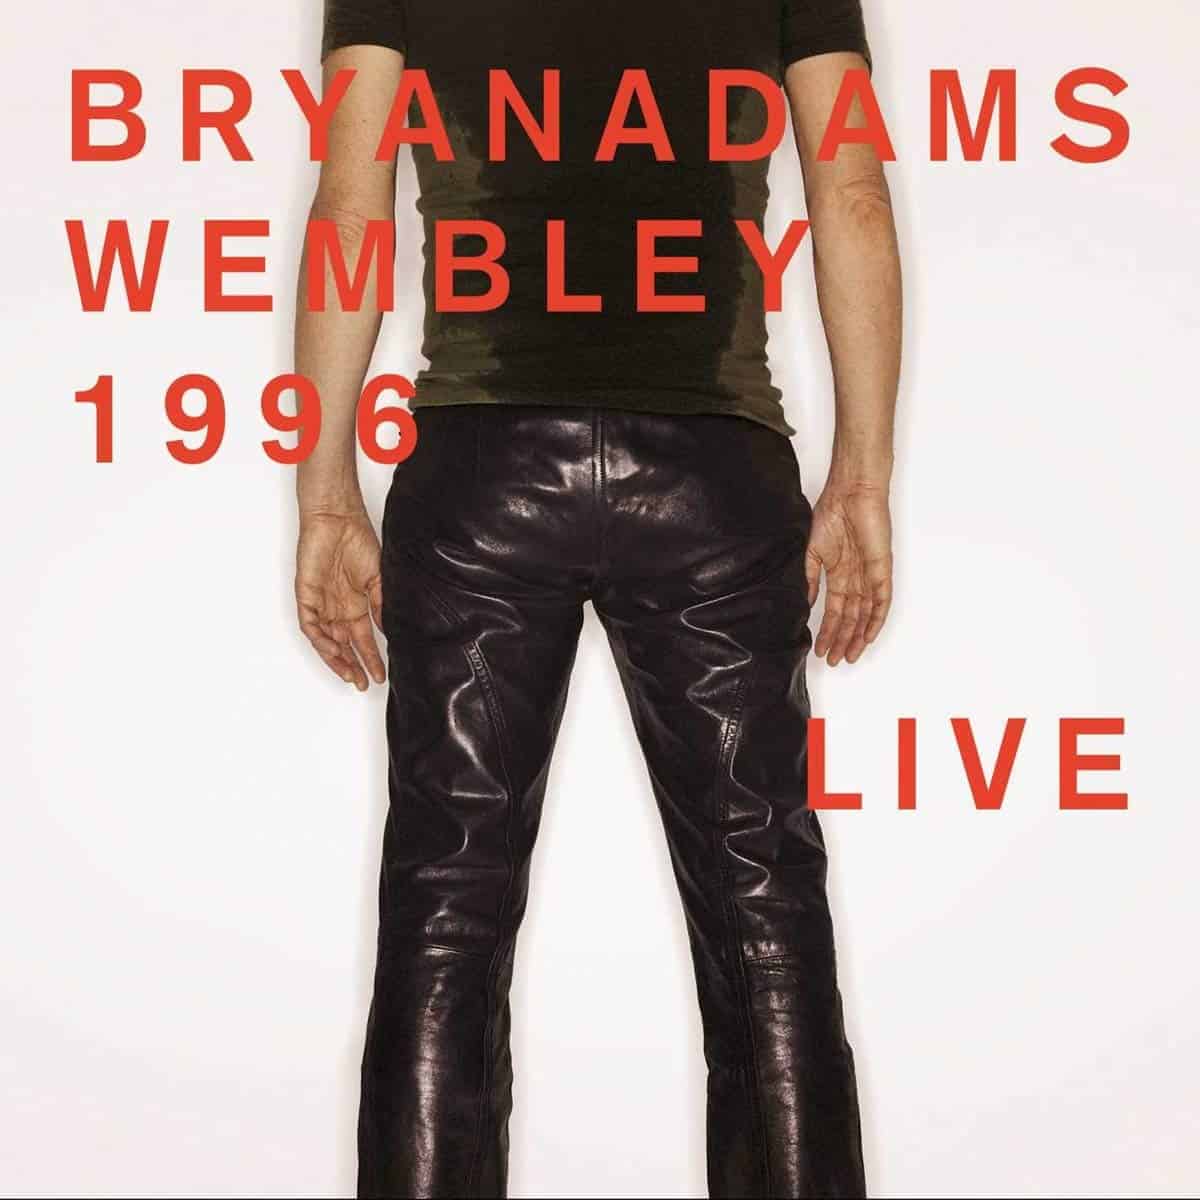 BRYAN ADAMS - WEMBLEY 1996 LIVE